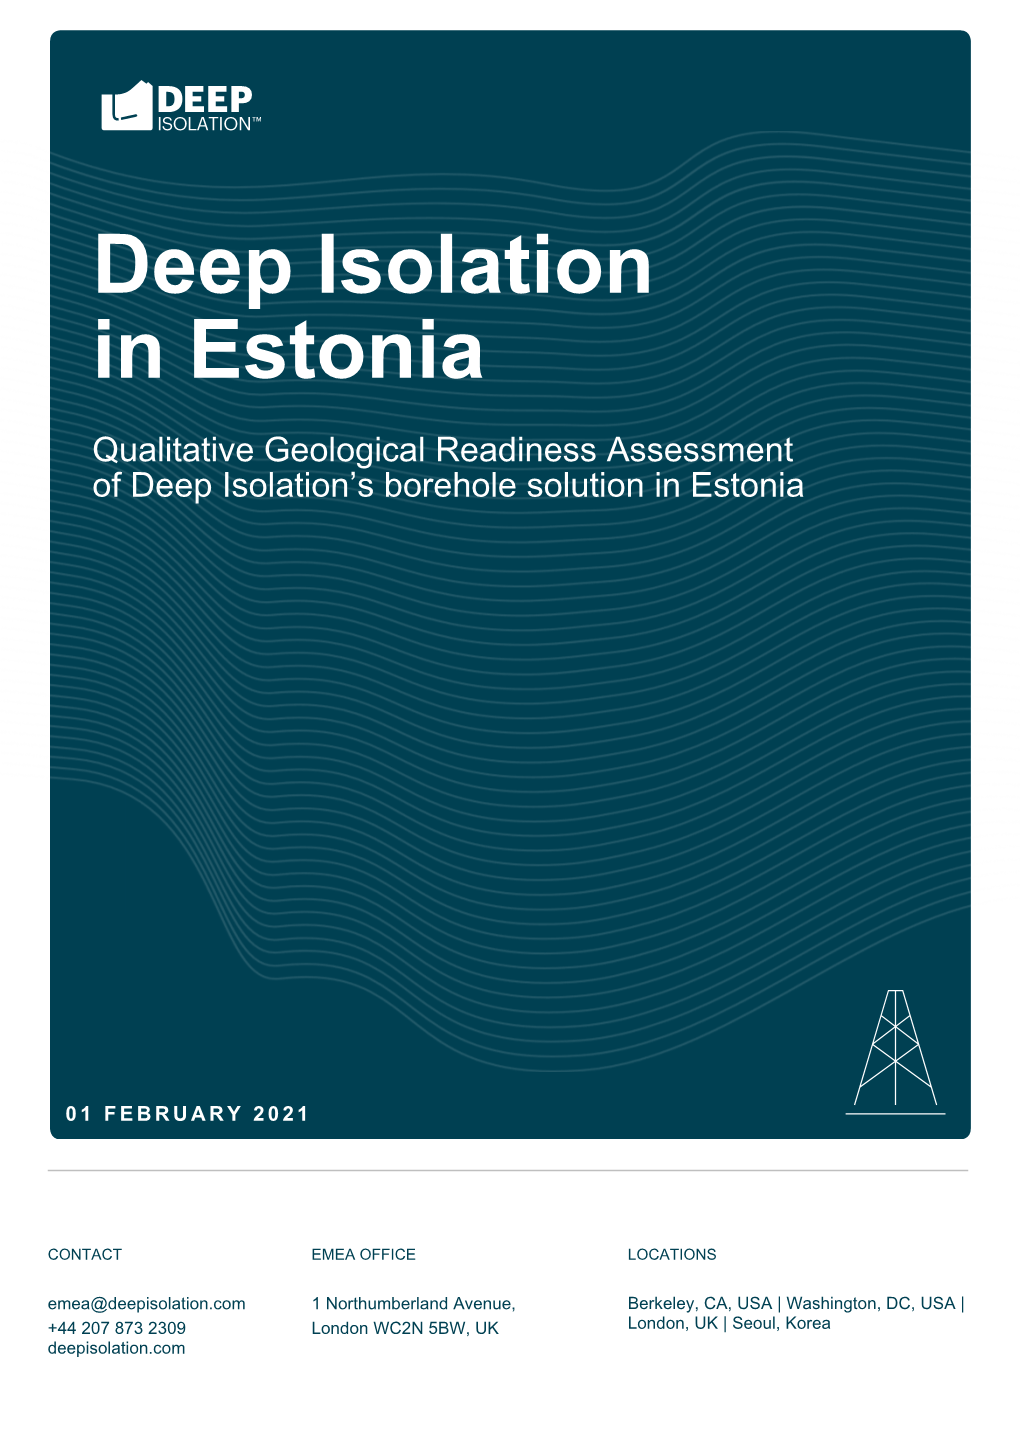 Deep Isolation in Estonia